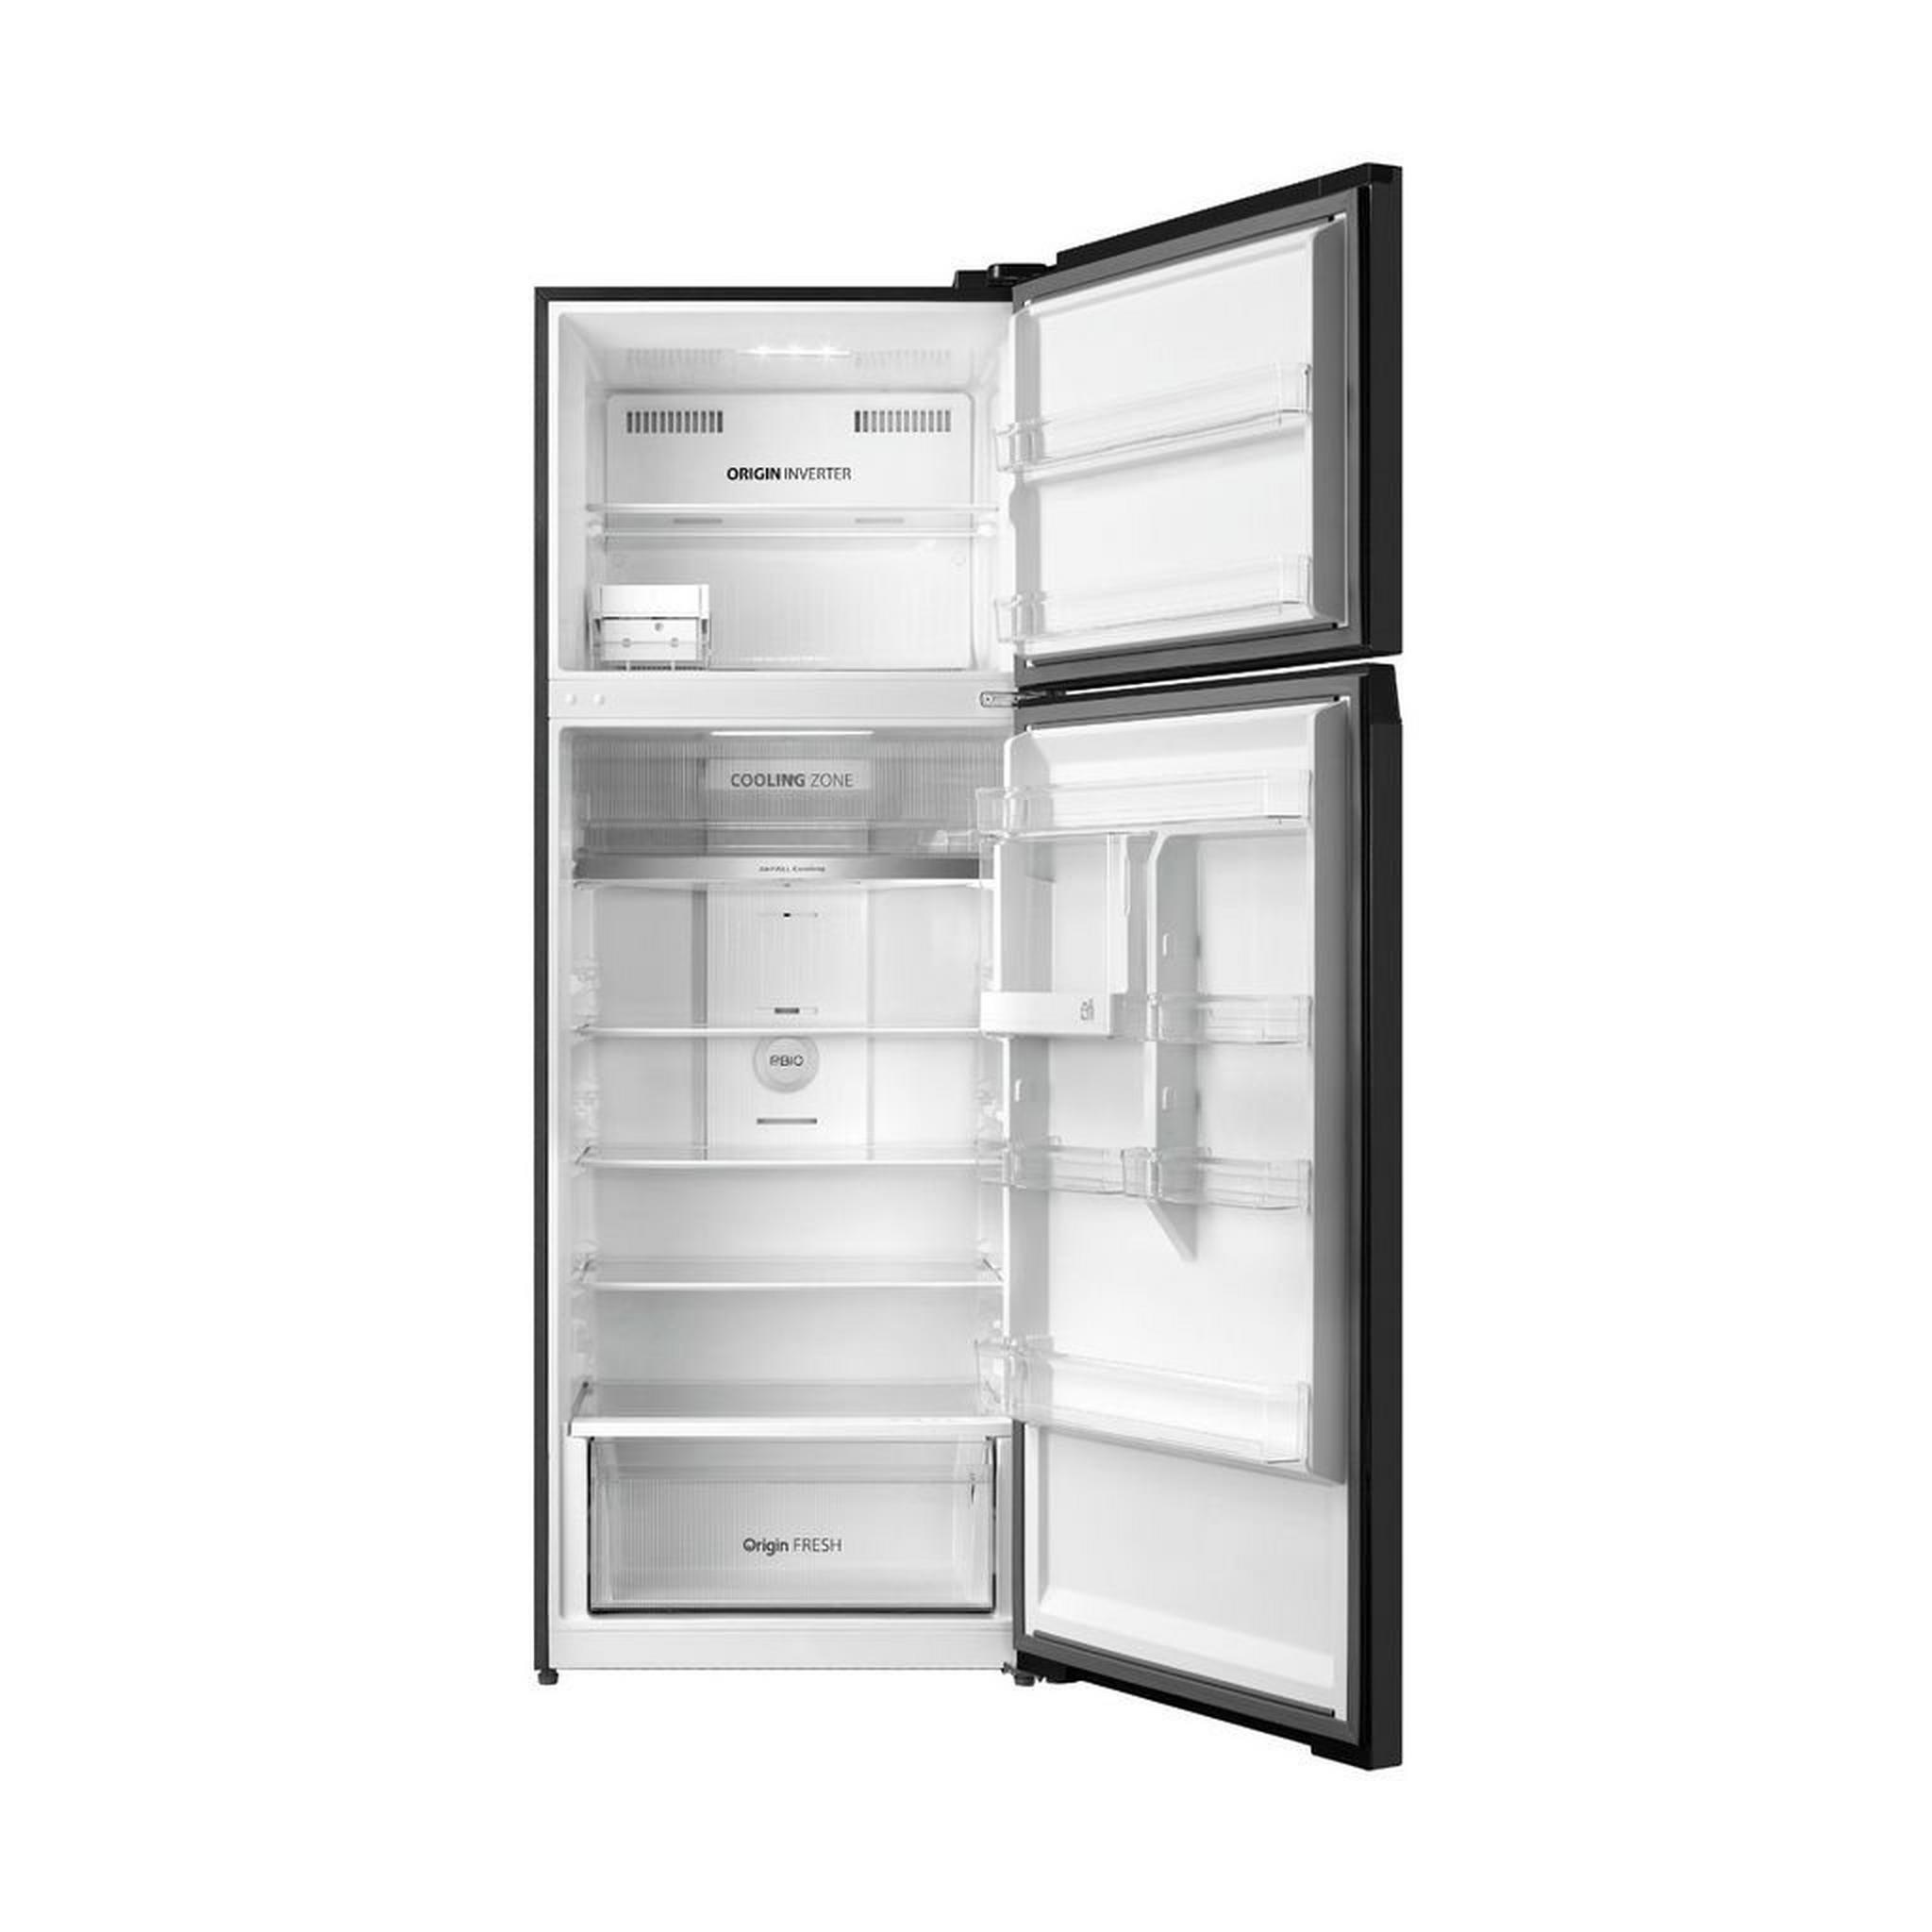 Toshiba Top Freezer Refrigerator + Whirlpool Front Load Washing machine +  Lagermania Gas Cooker